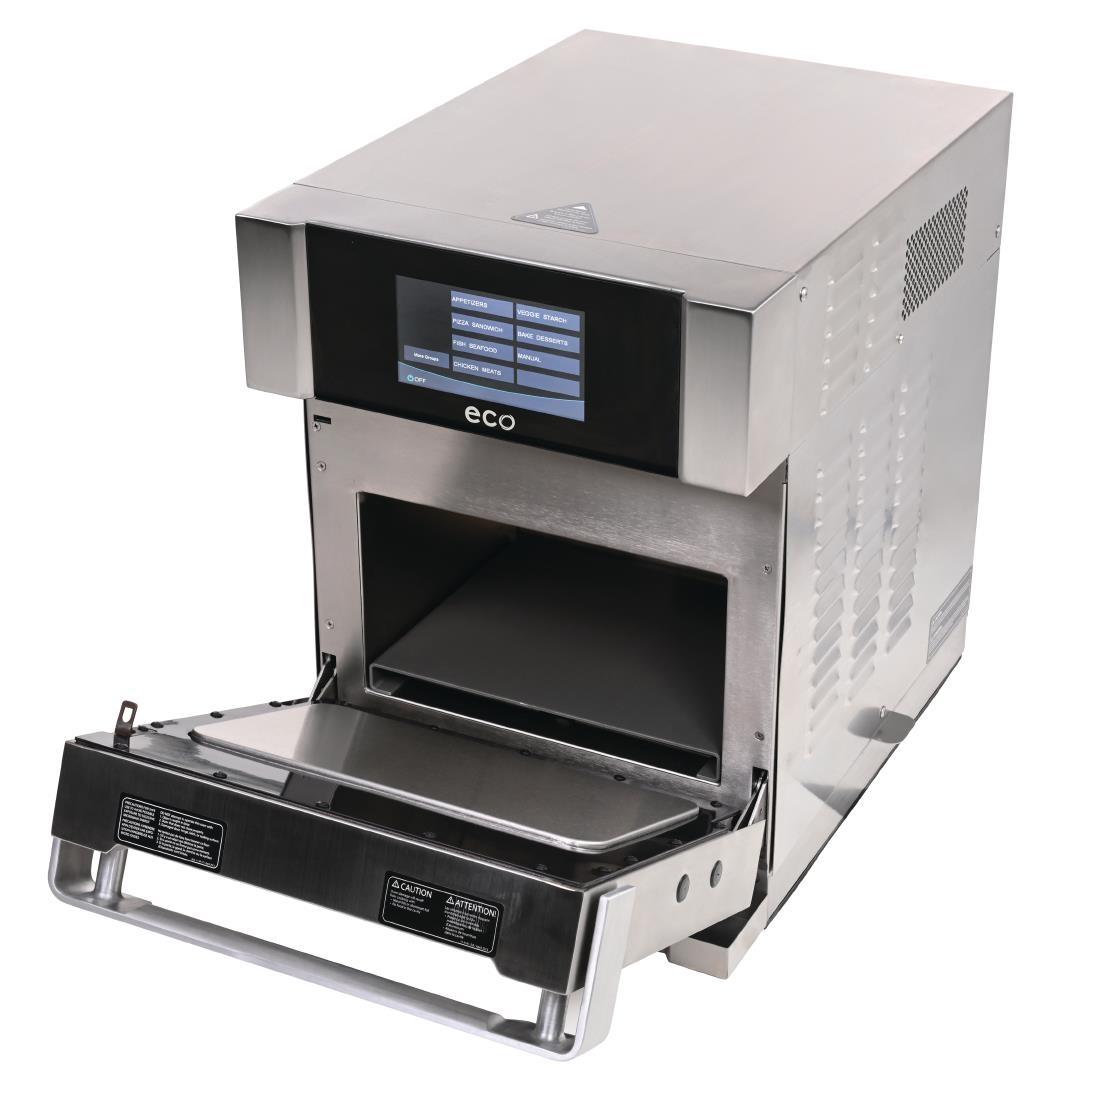 Turbochef Eco Rapid Cook Oven ECO-9500-13 Silver - DE309  - 3